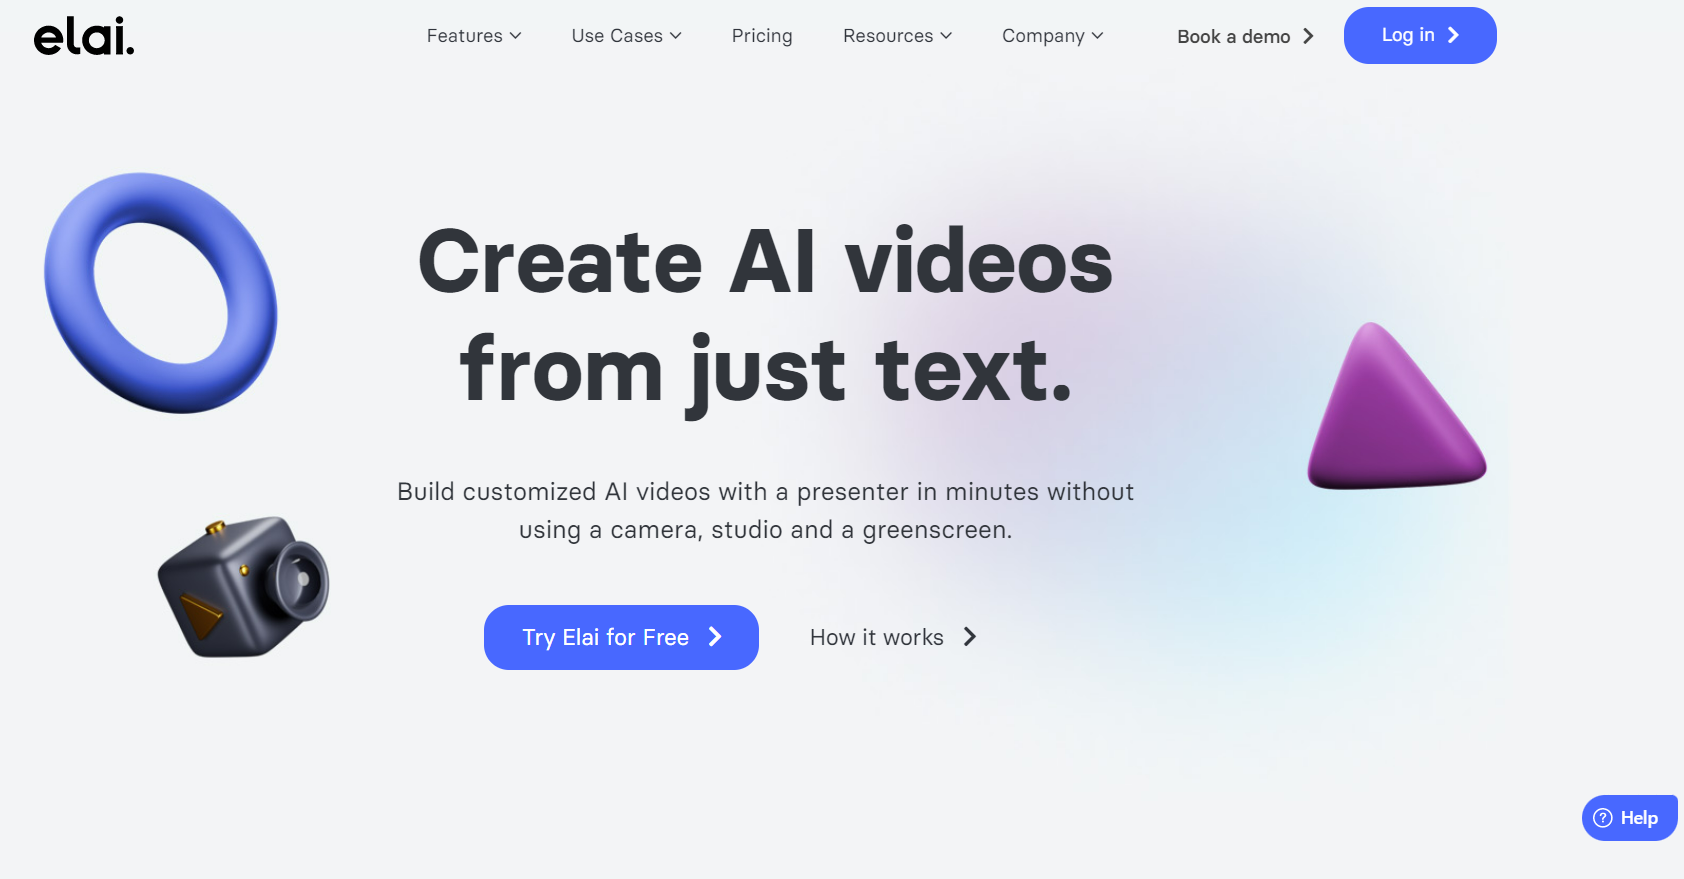 Elai ioElaio is an AI platform that automates video generation